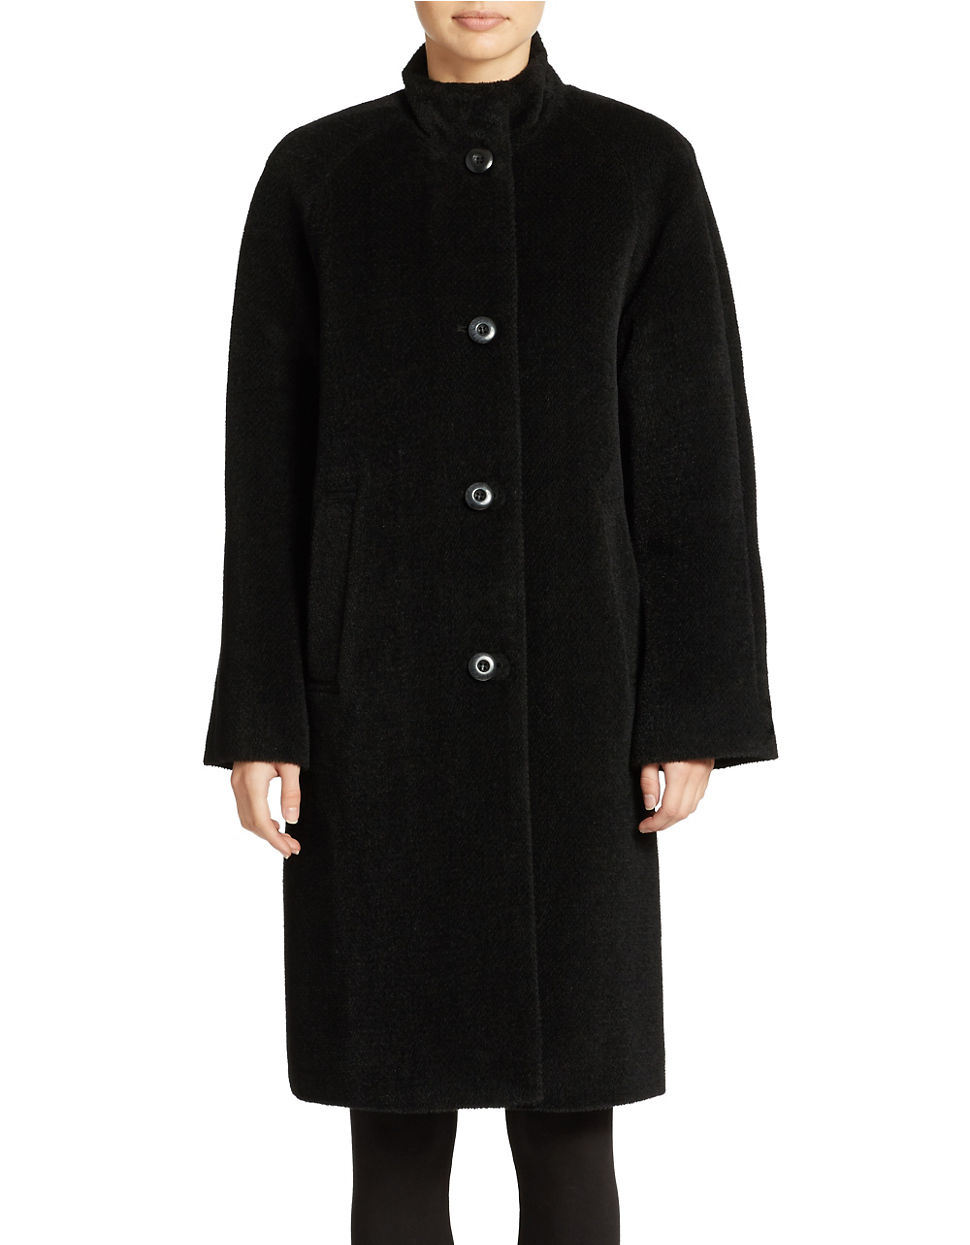 Jones new york Petite Long Wool Blend Coat in Black | Lyst